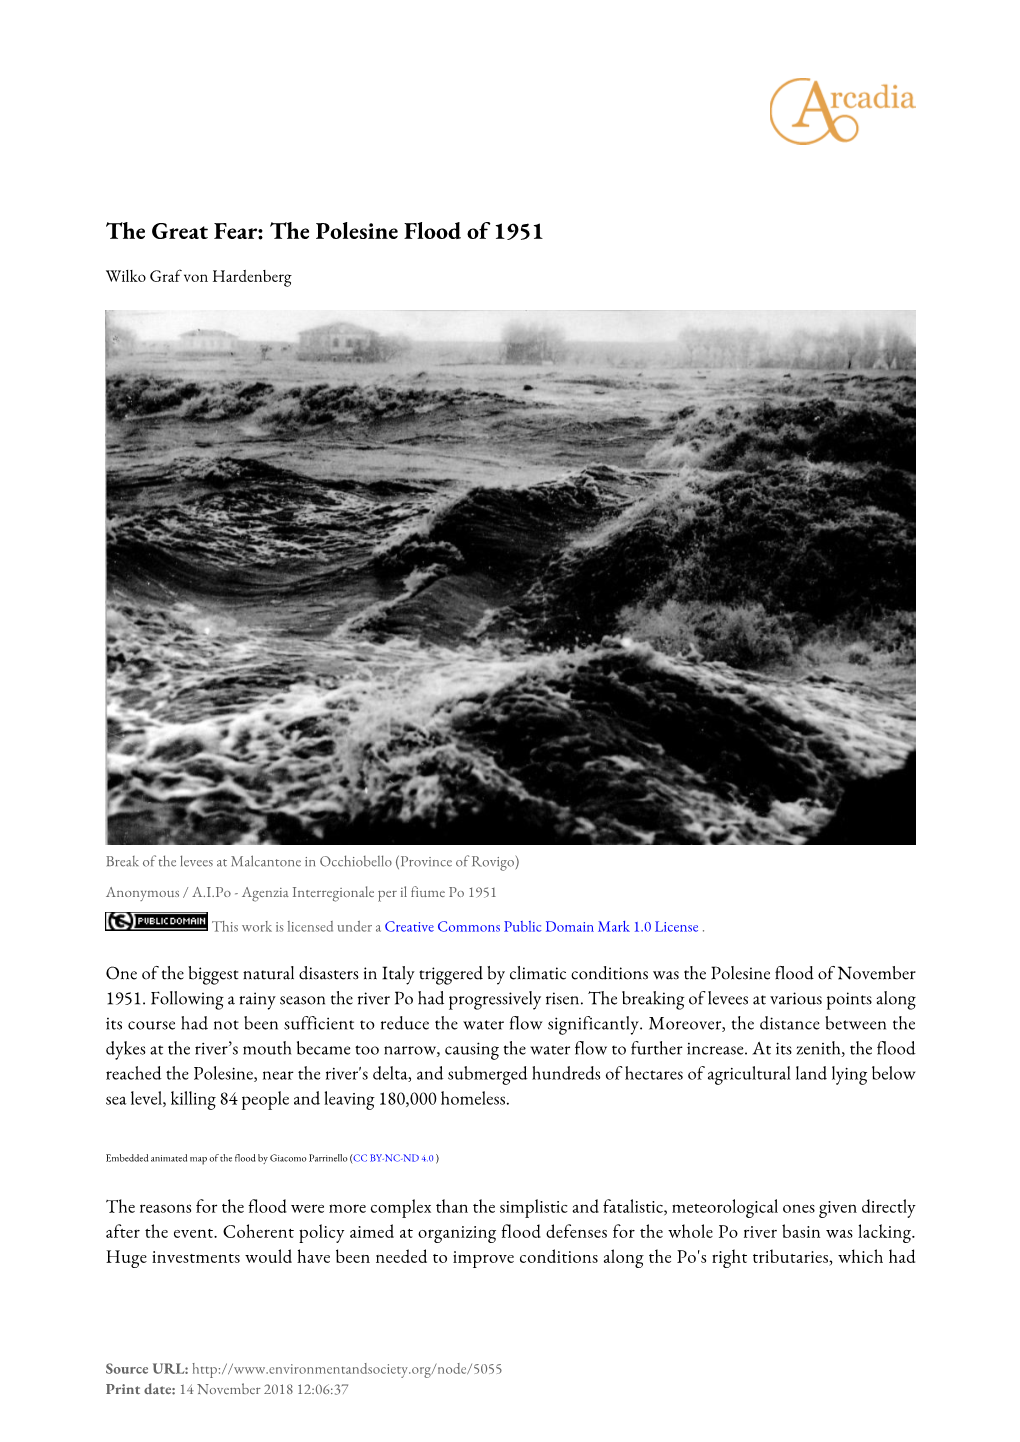 The Great Fear: the Polesine Flood of 1951